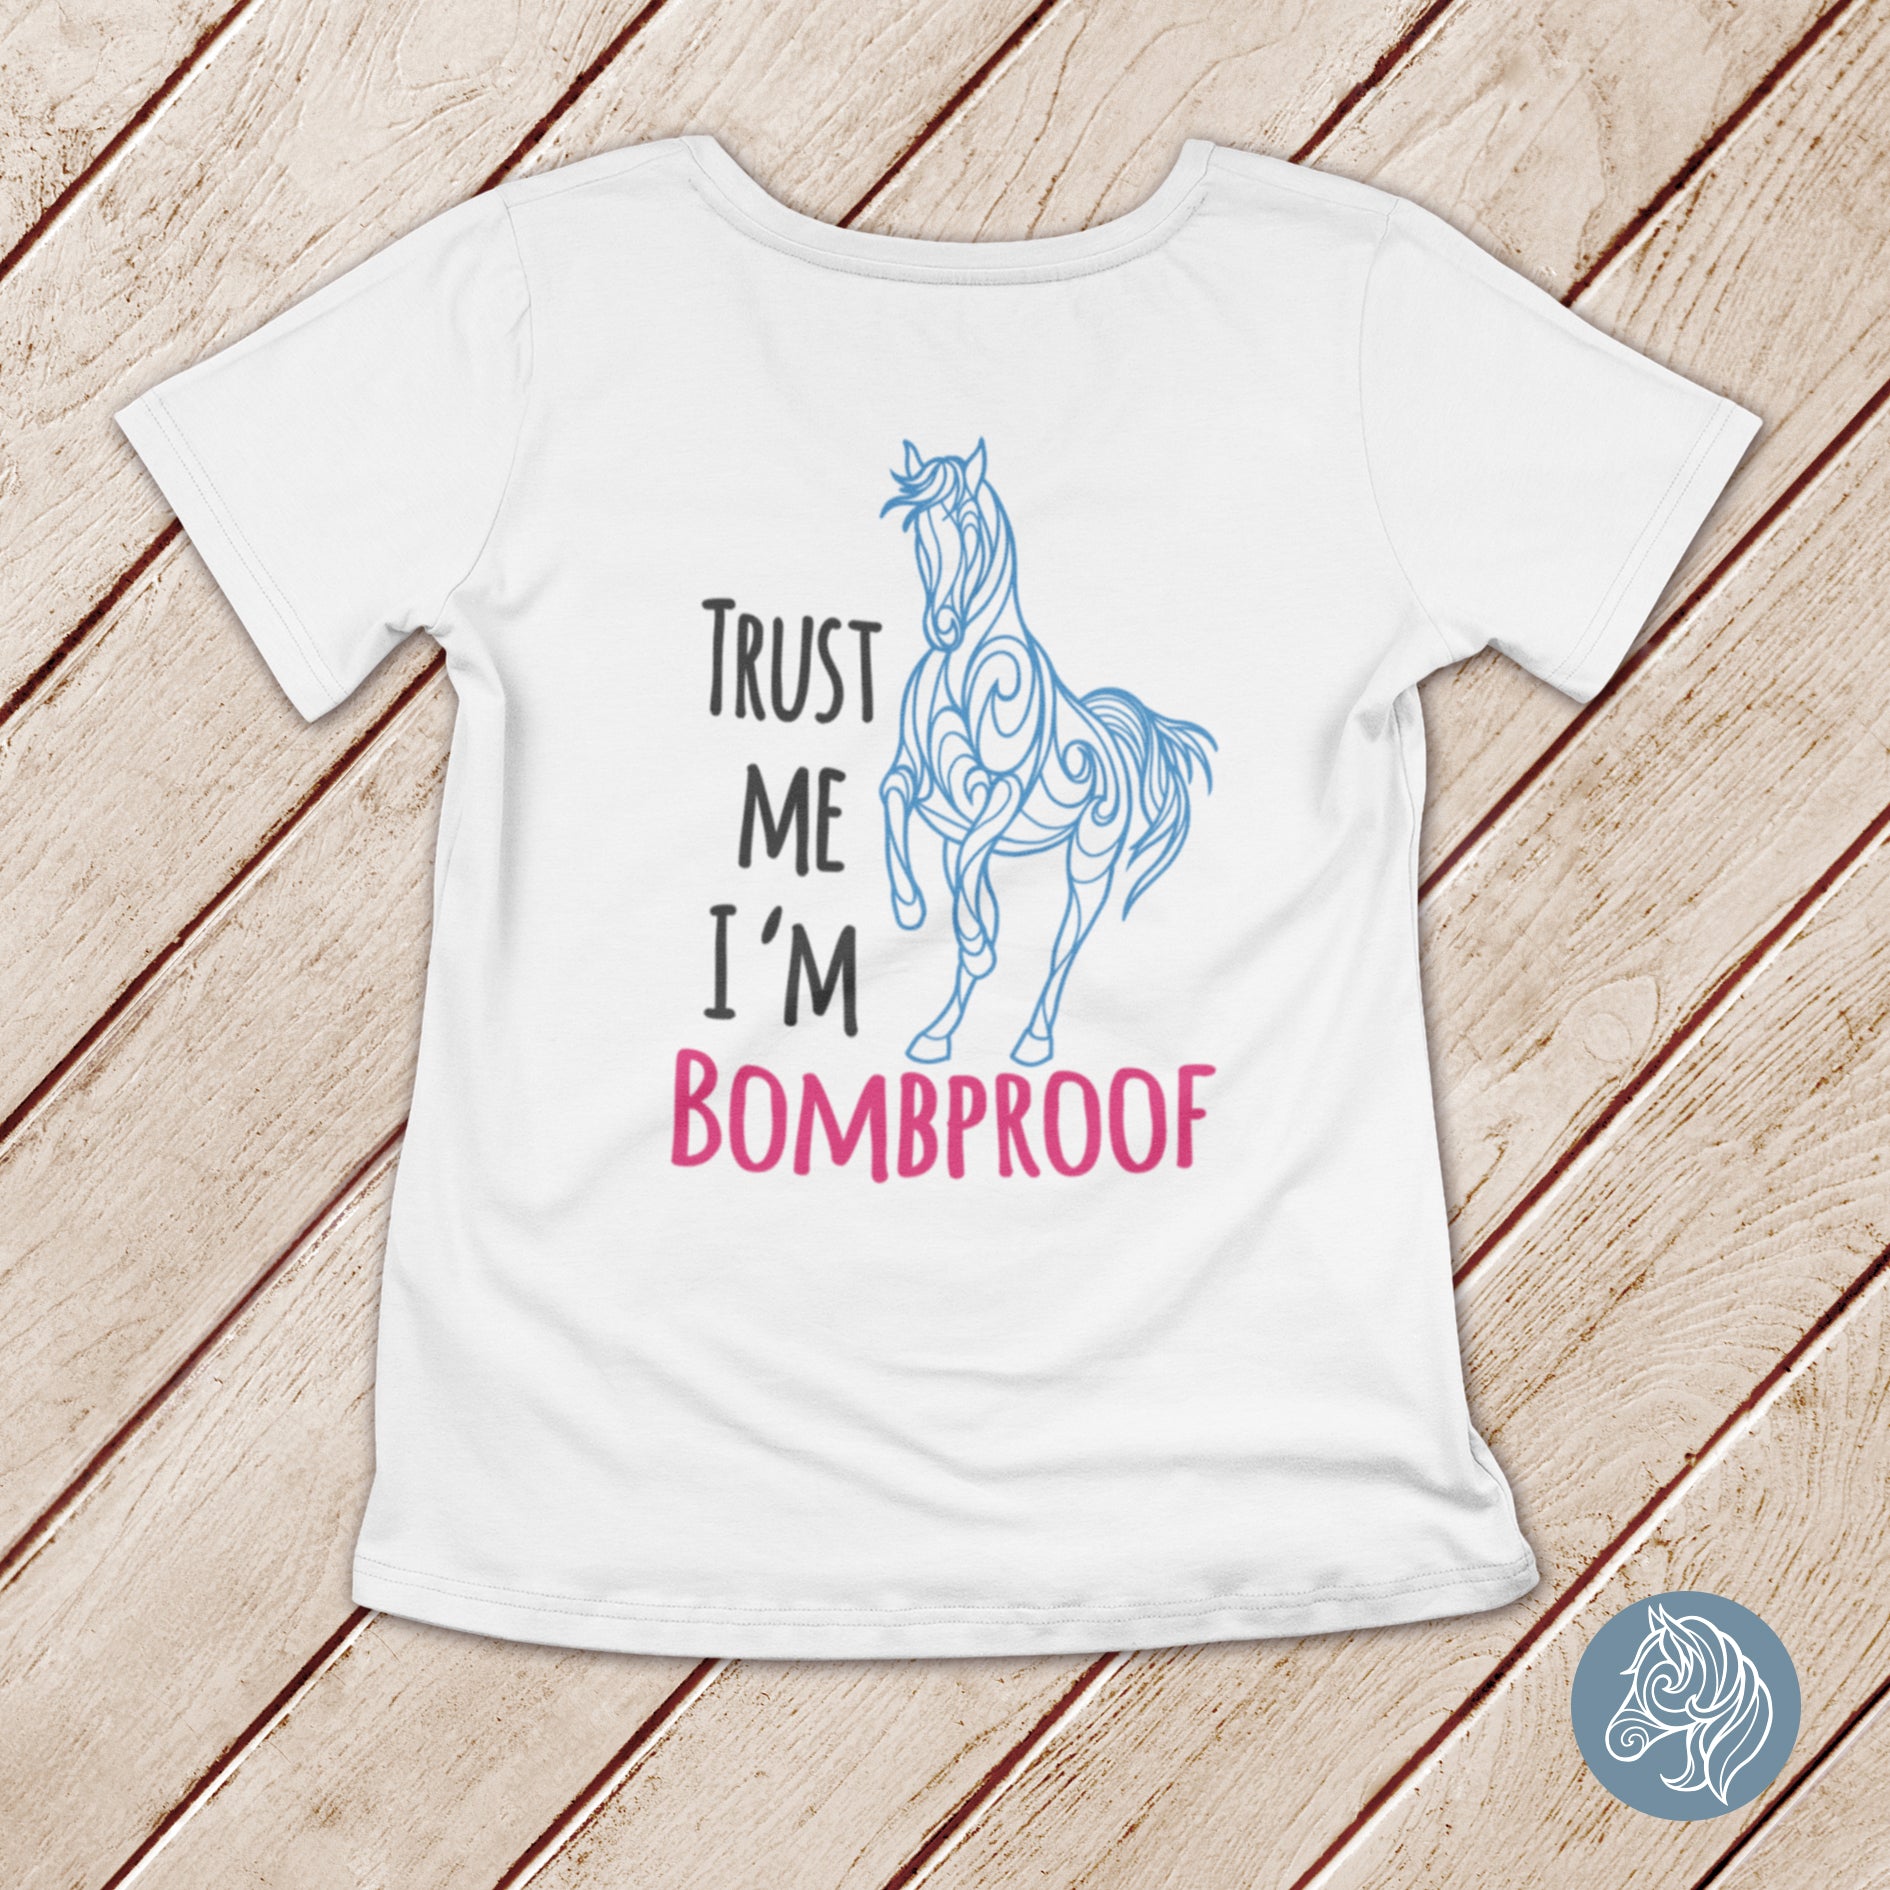 Trust Me I'm Bombproof - Women T-shirt (More Colors)